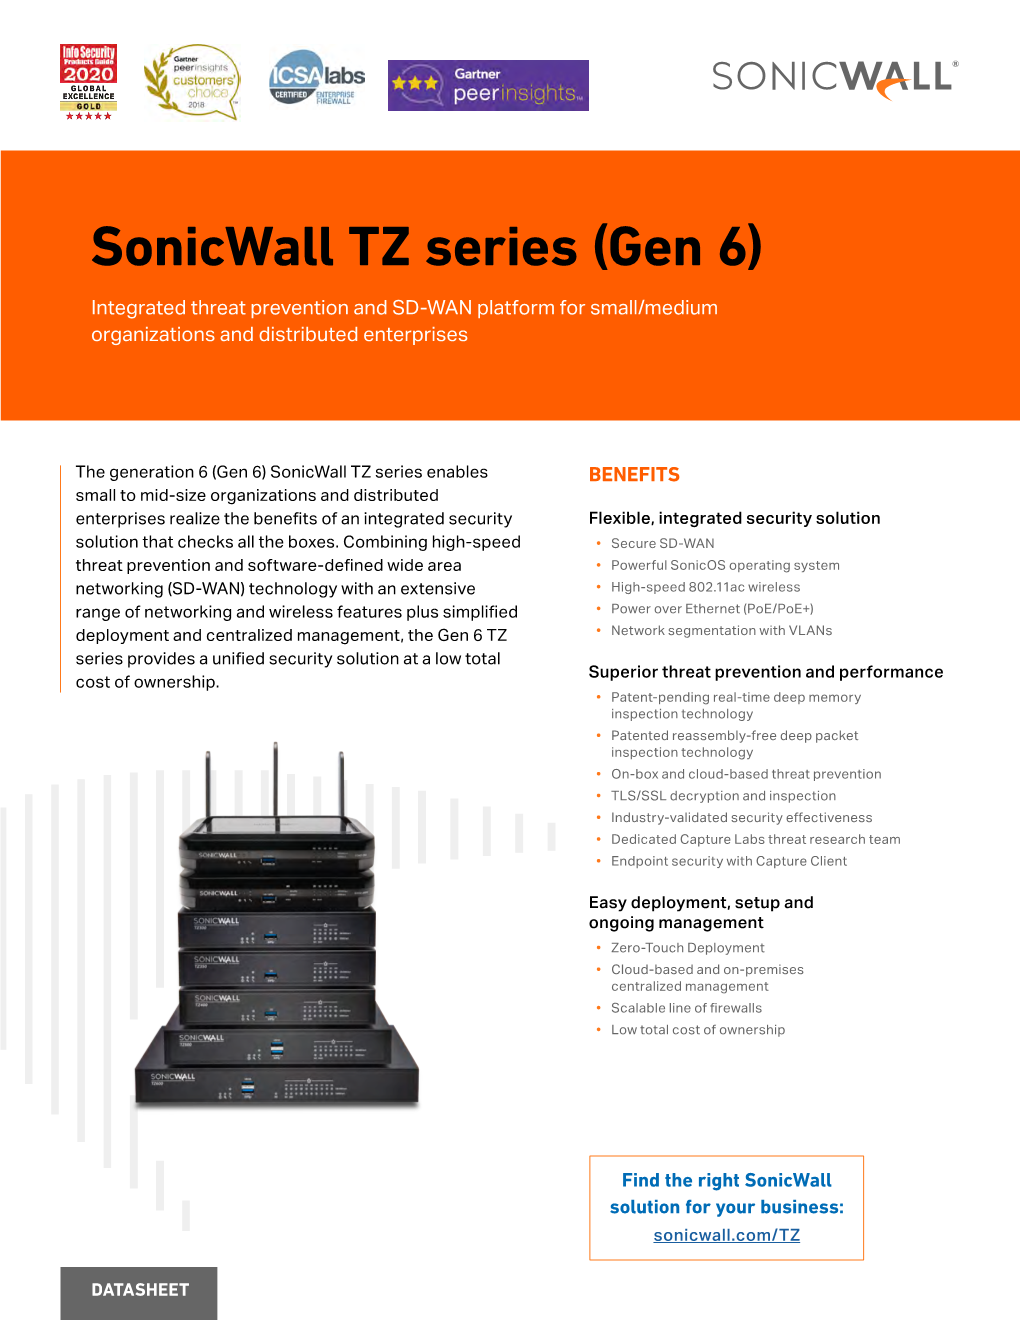 Sonicwall TZ Series (Gen 6)